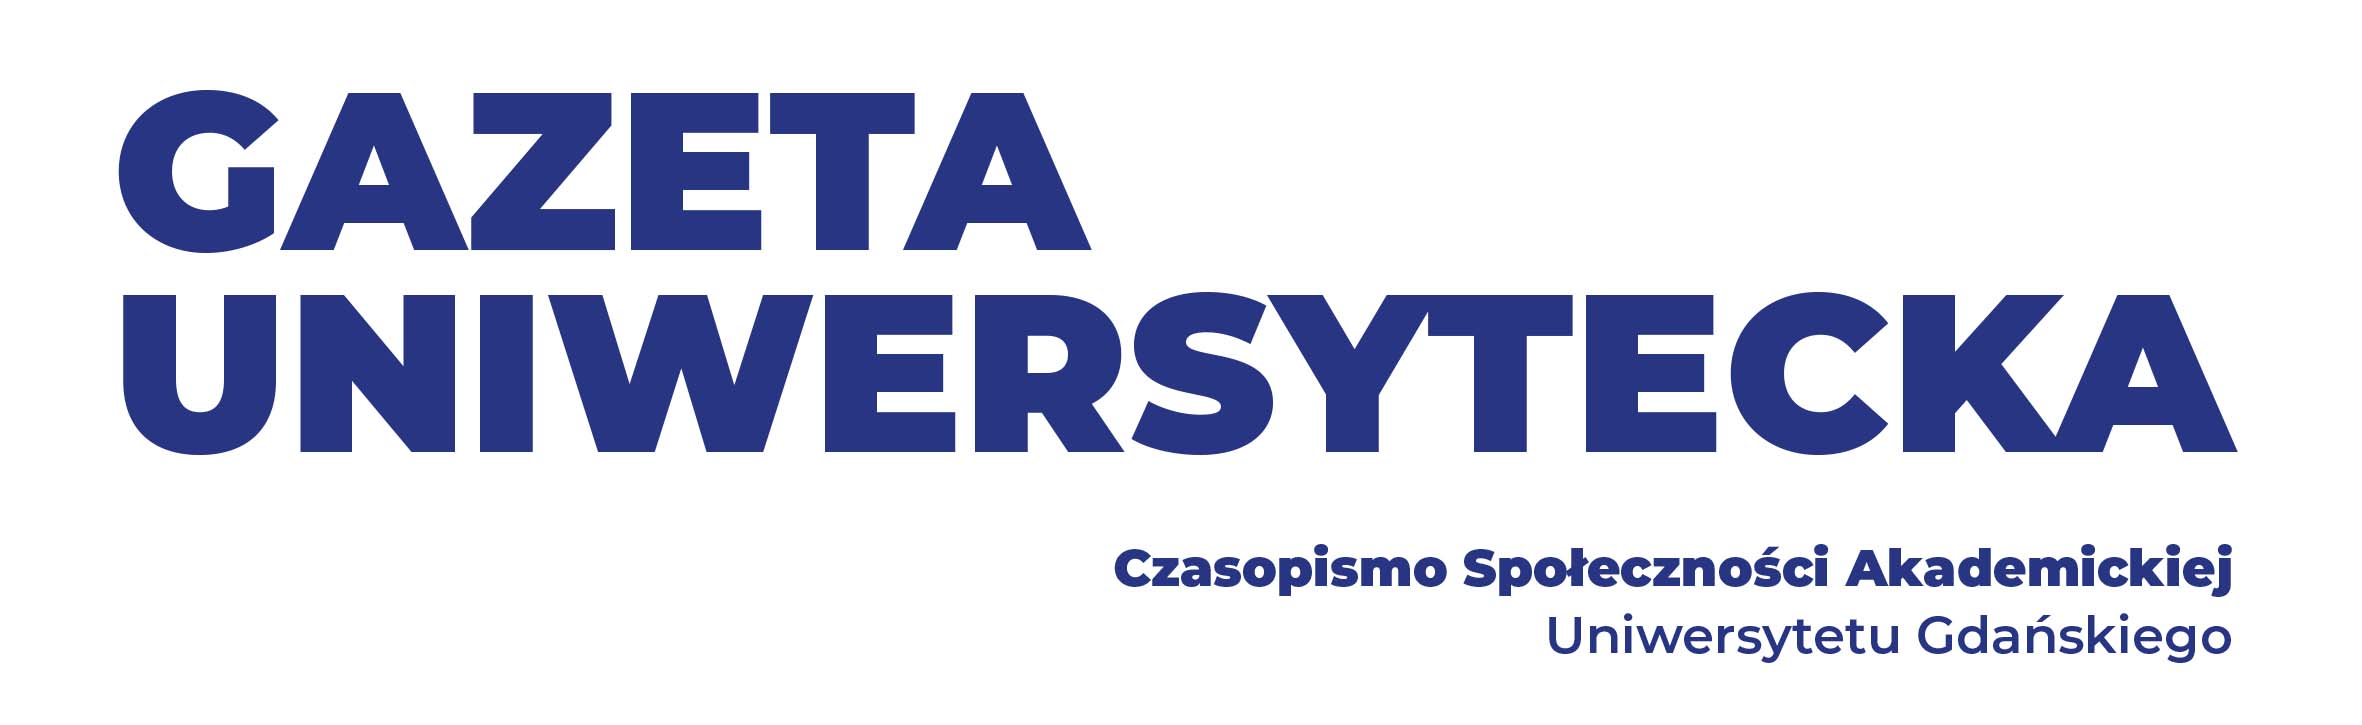 Gazeta Uniwersytecka logo - UG